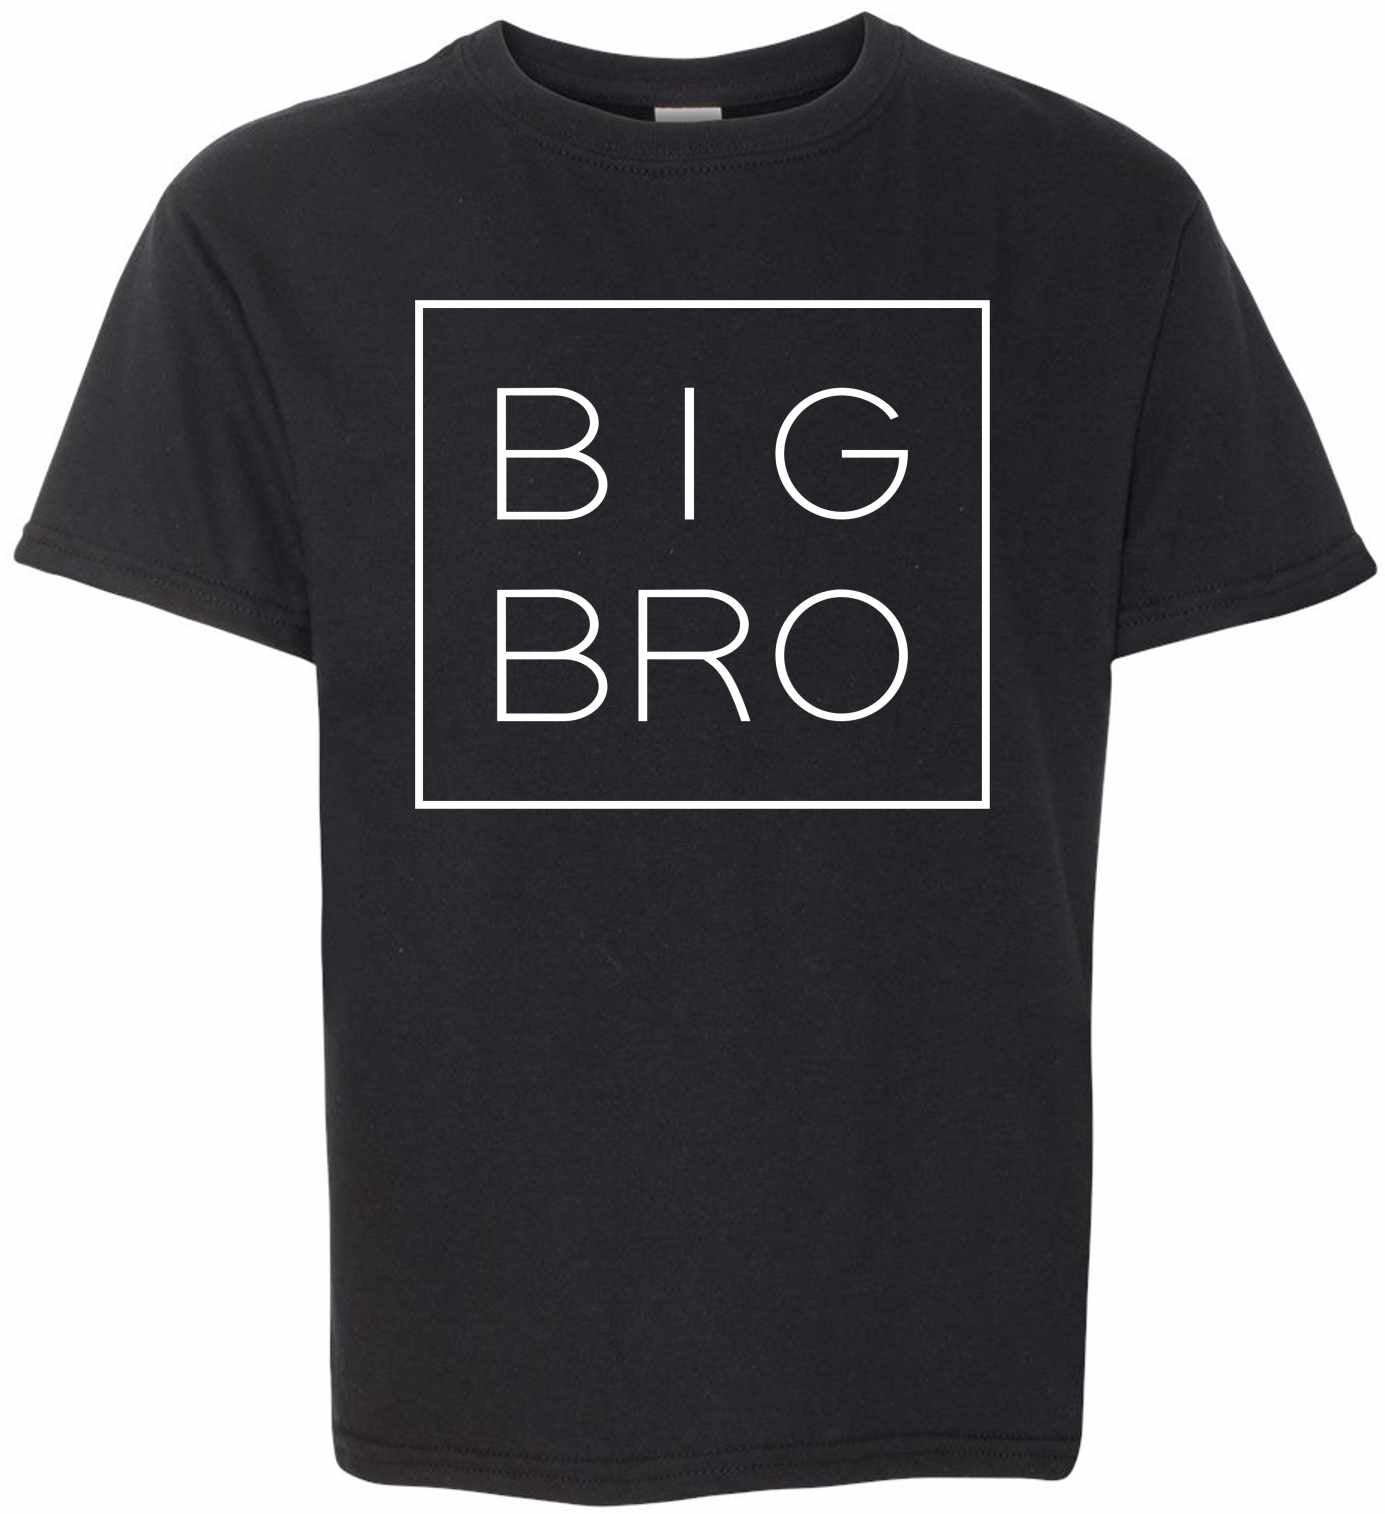 Big Bro - Box on Kids T-Shirt